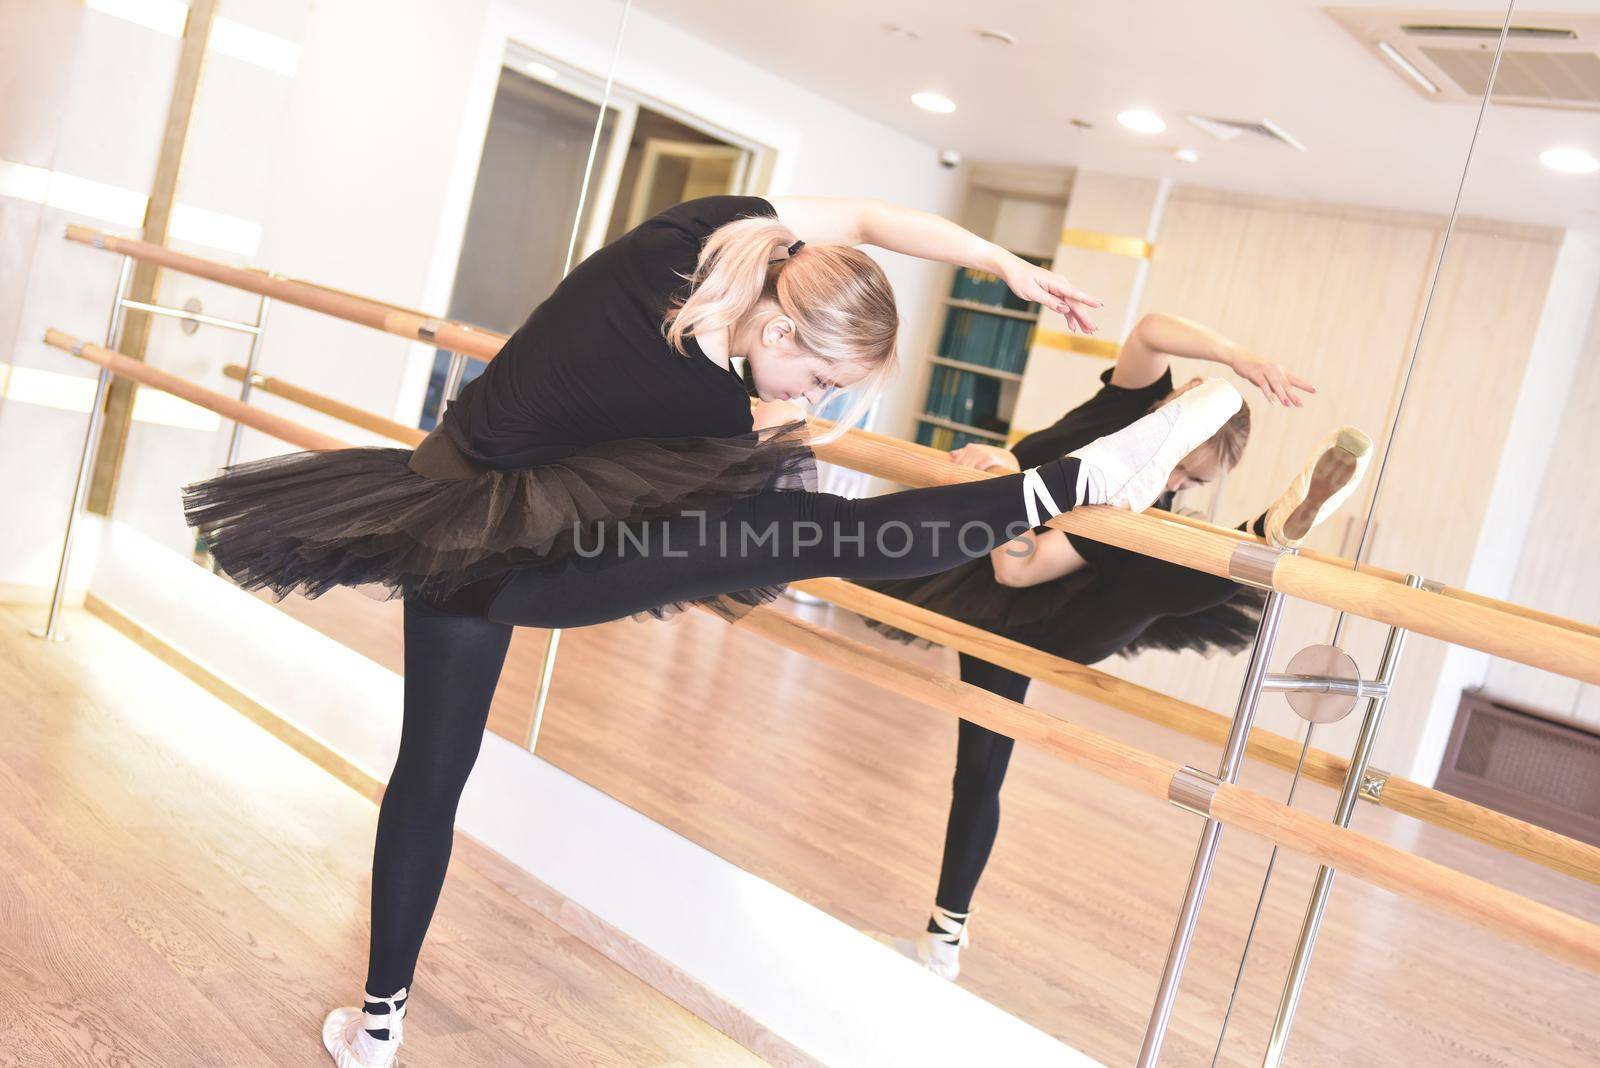 ballerina in black wear is practicing in the dance studio by Nickstock